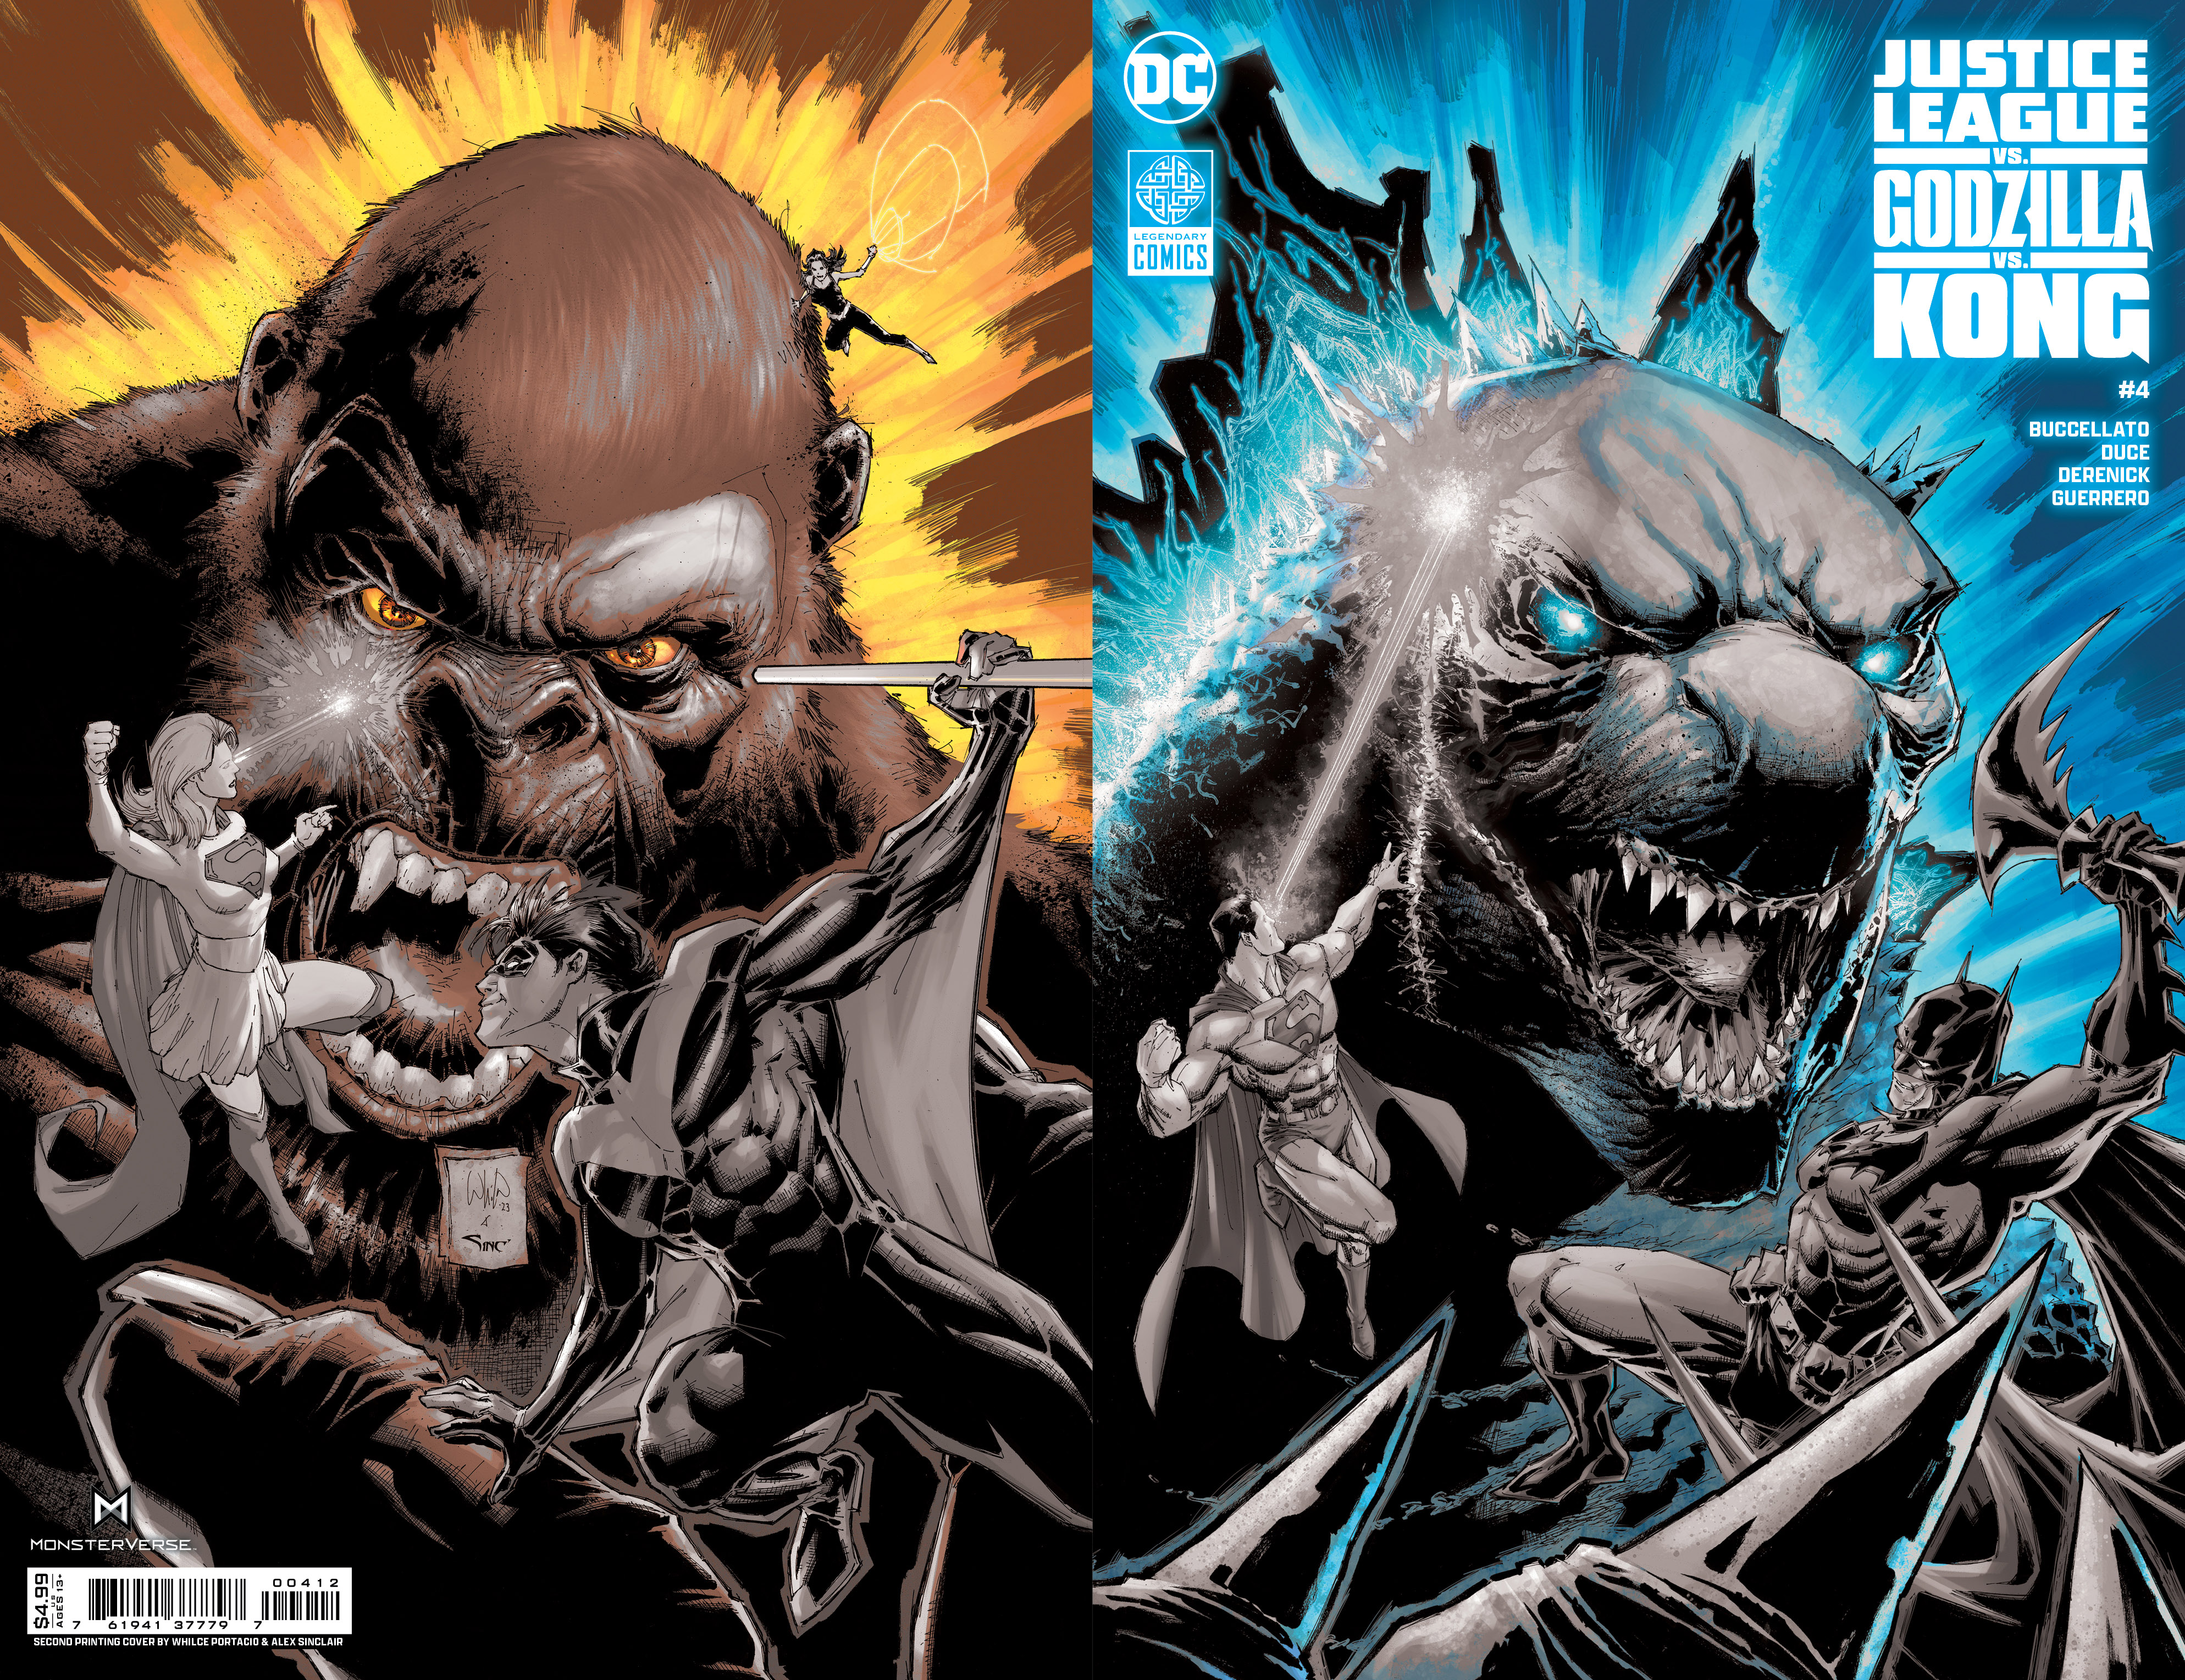 Justice League Vs Godzilla Vs Kong #4 Second Printing